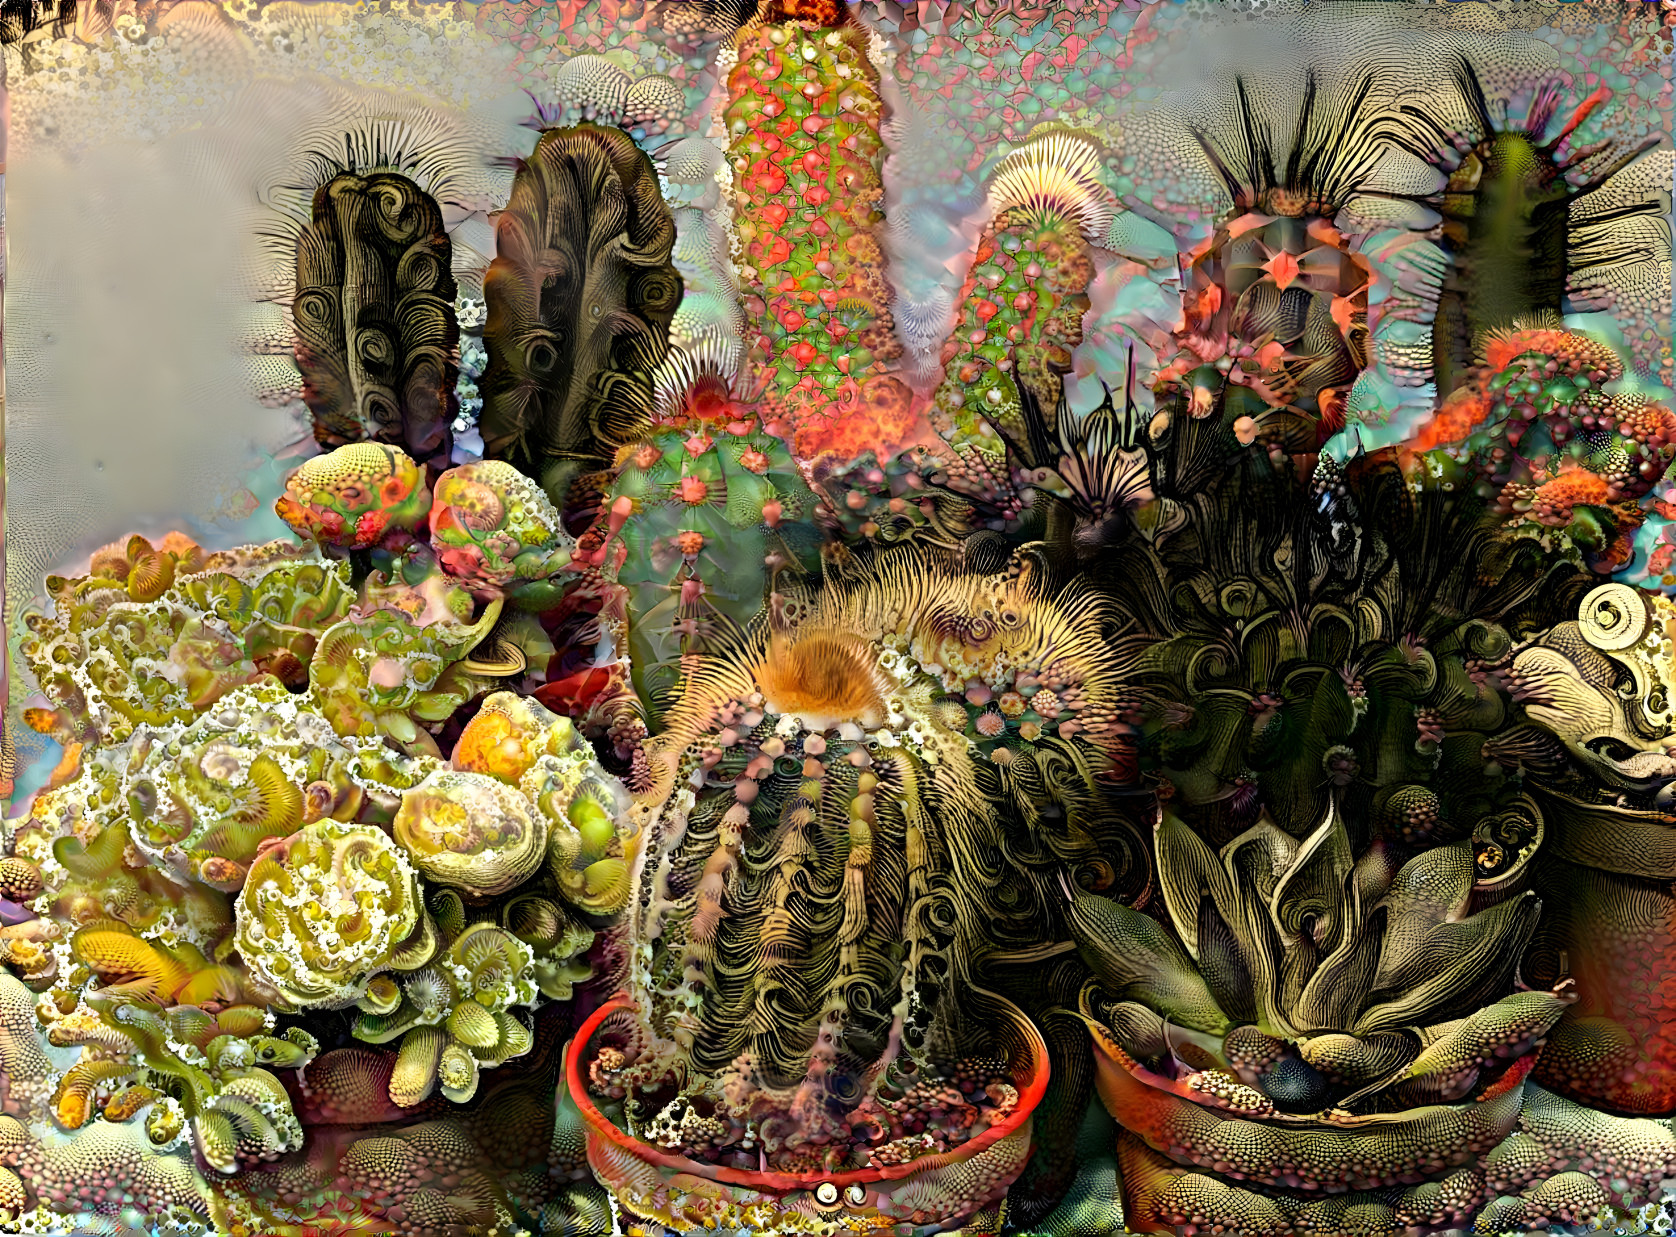 Assorted Cacti